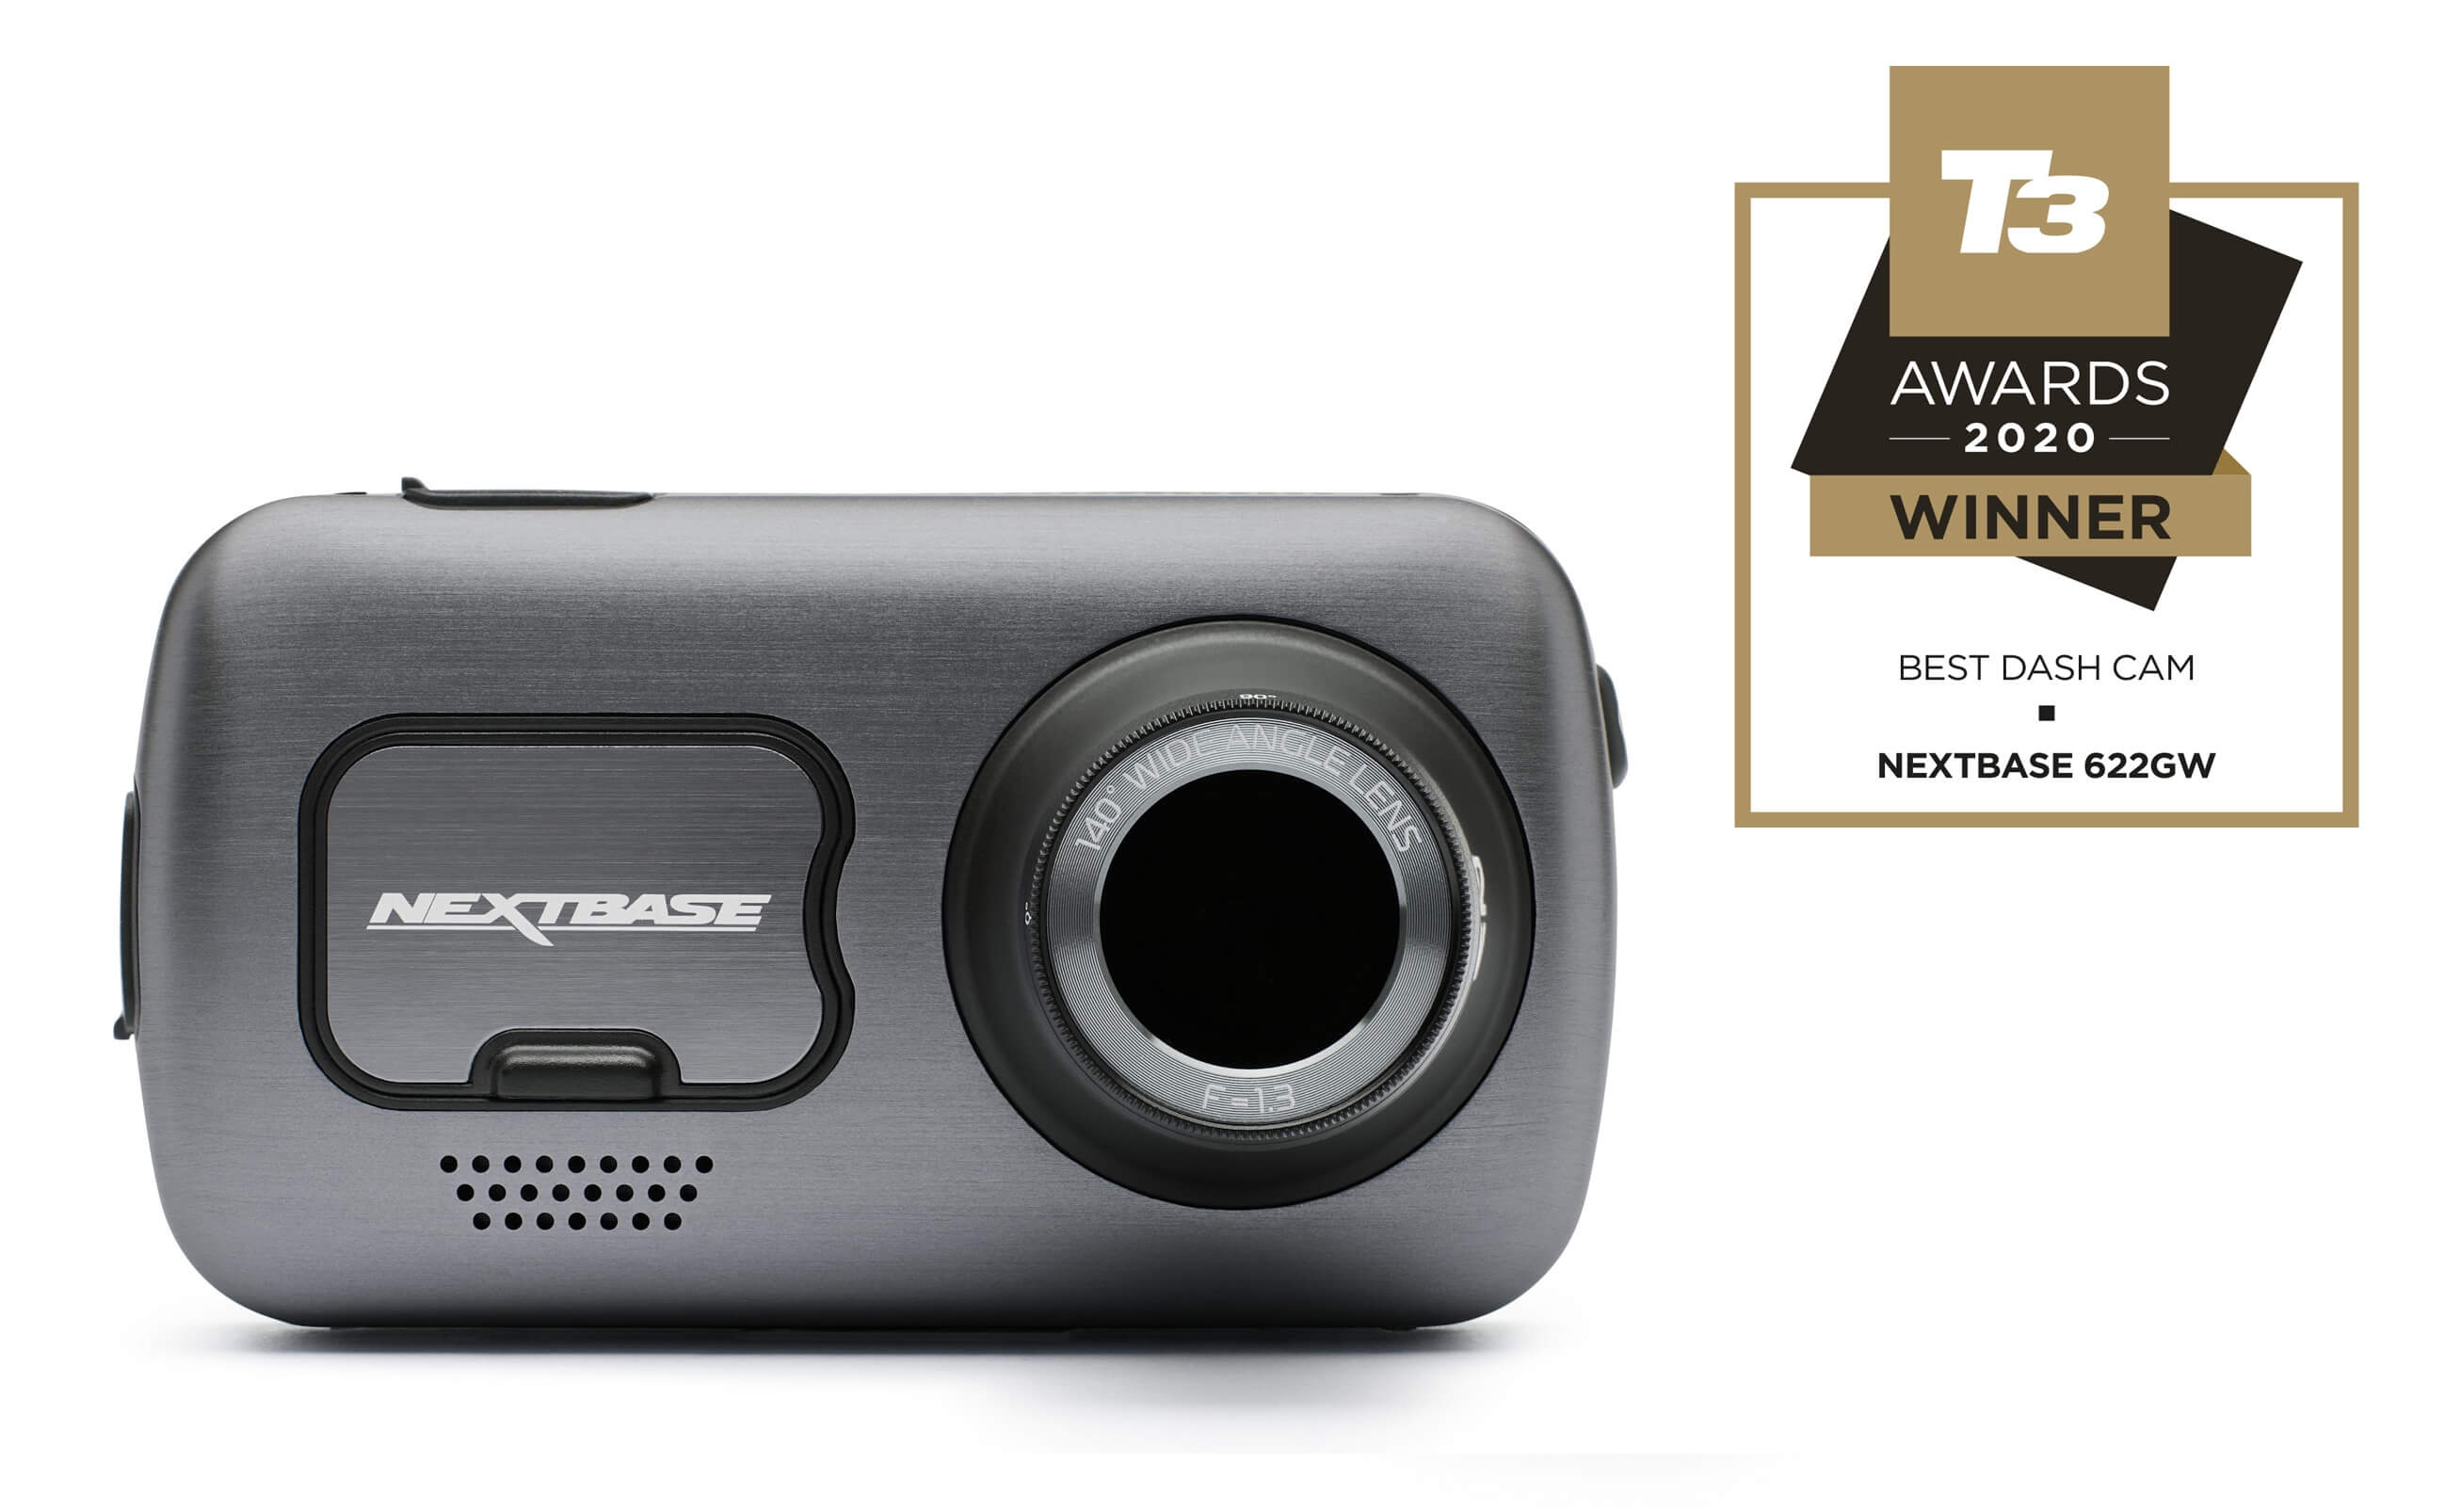 Toerist gerucht Aanbeveling Nextbase 622GW bekroond tot beste dashcam door T3 Awards 2020 - Nextbase -  Europa